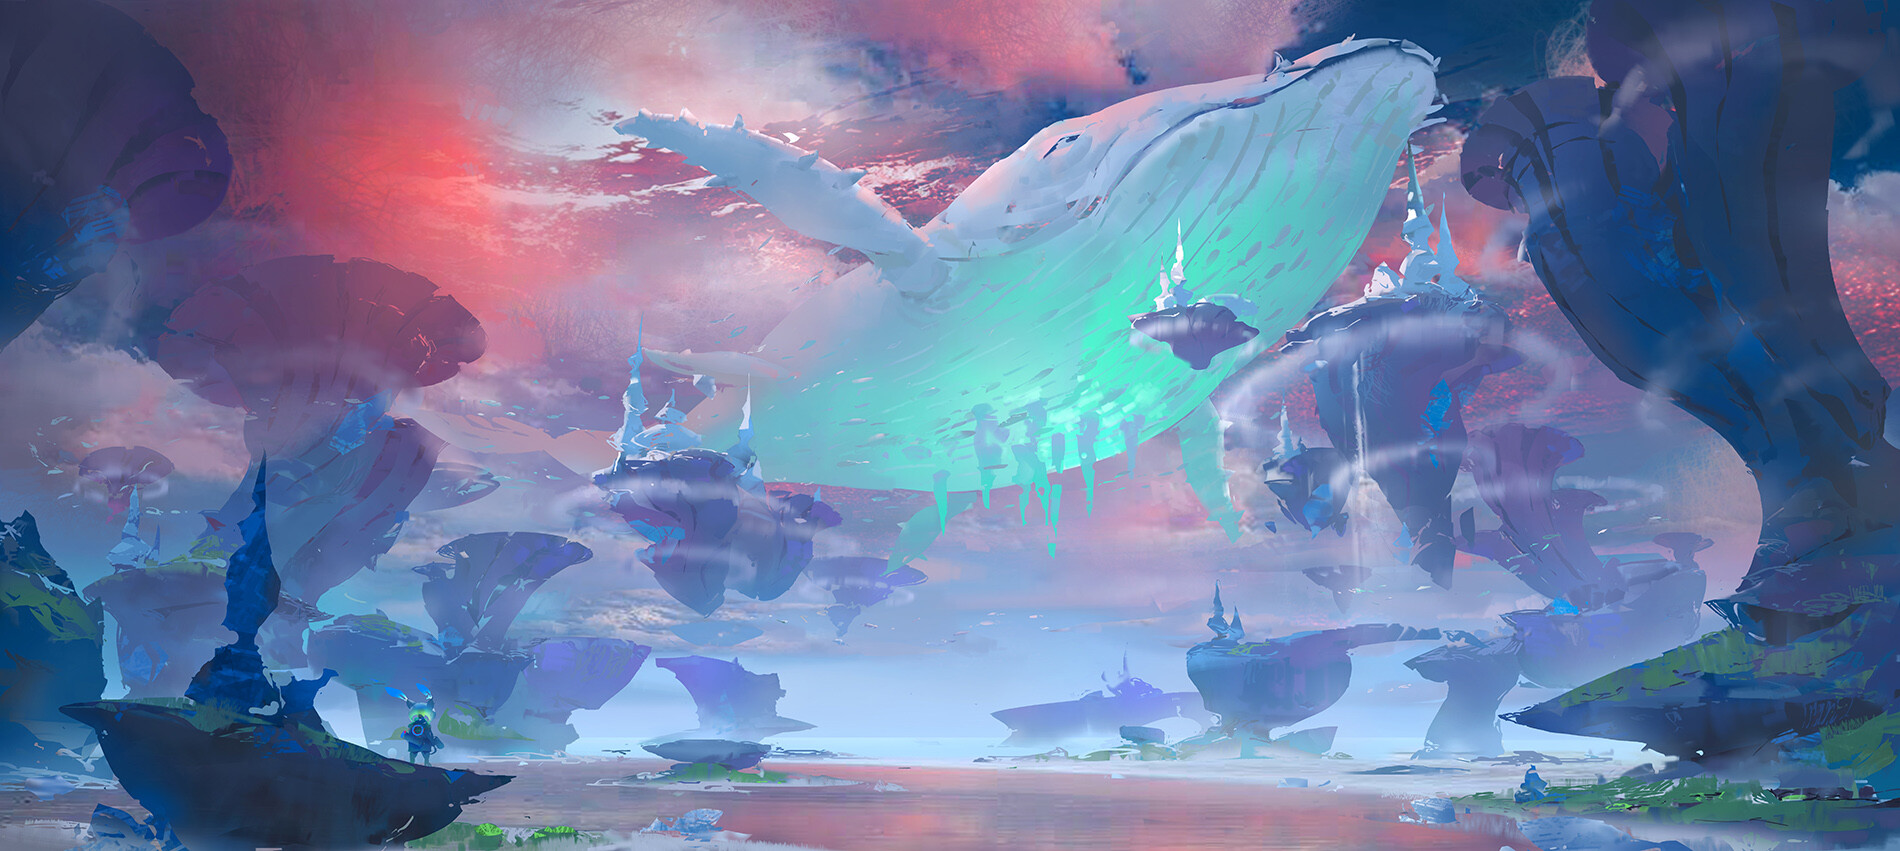 General 1900x851 digital art fantasy art 3 LY Studio whale landscape surreal